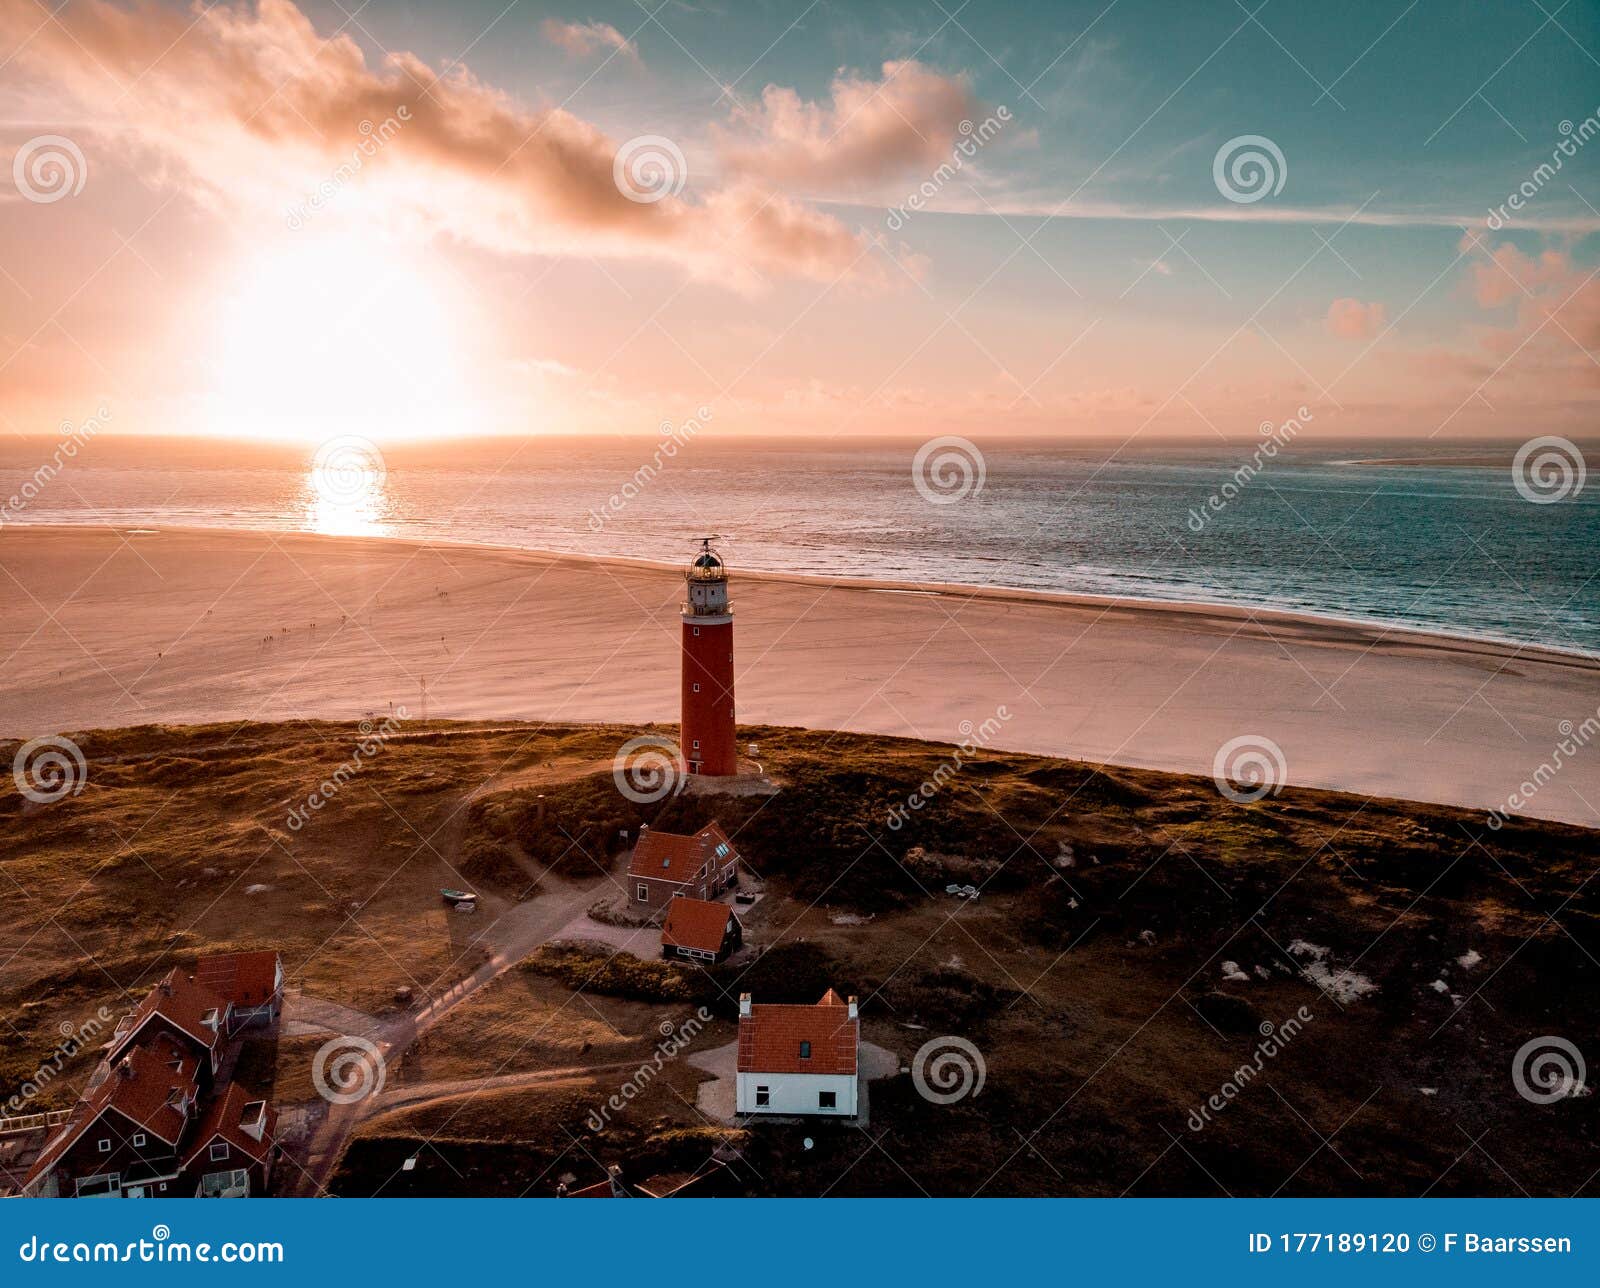 texel lighthouse during sunset netherlands dutch island texel